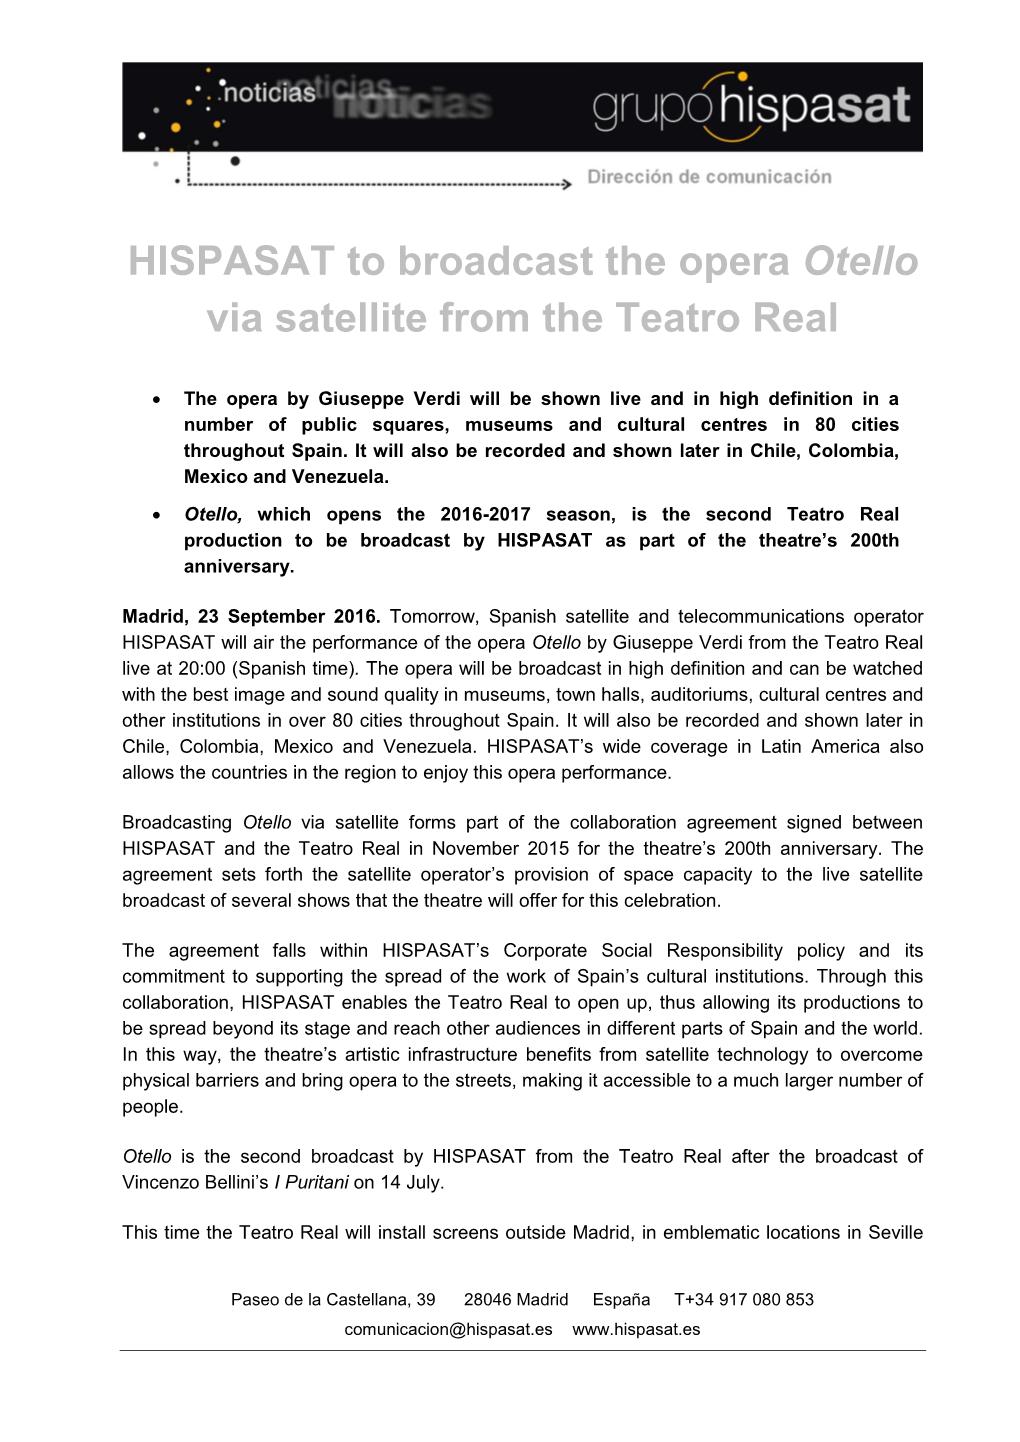 HISPASAT to Broadcast the Opera Otello Via Satellite from the Teatro Real